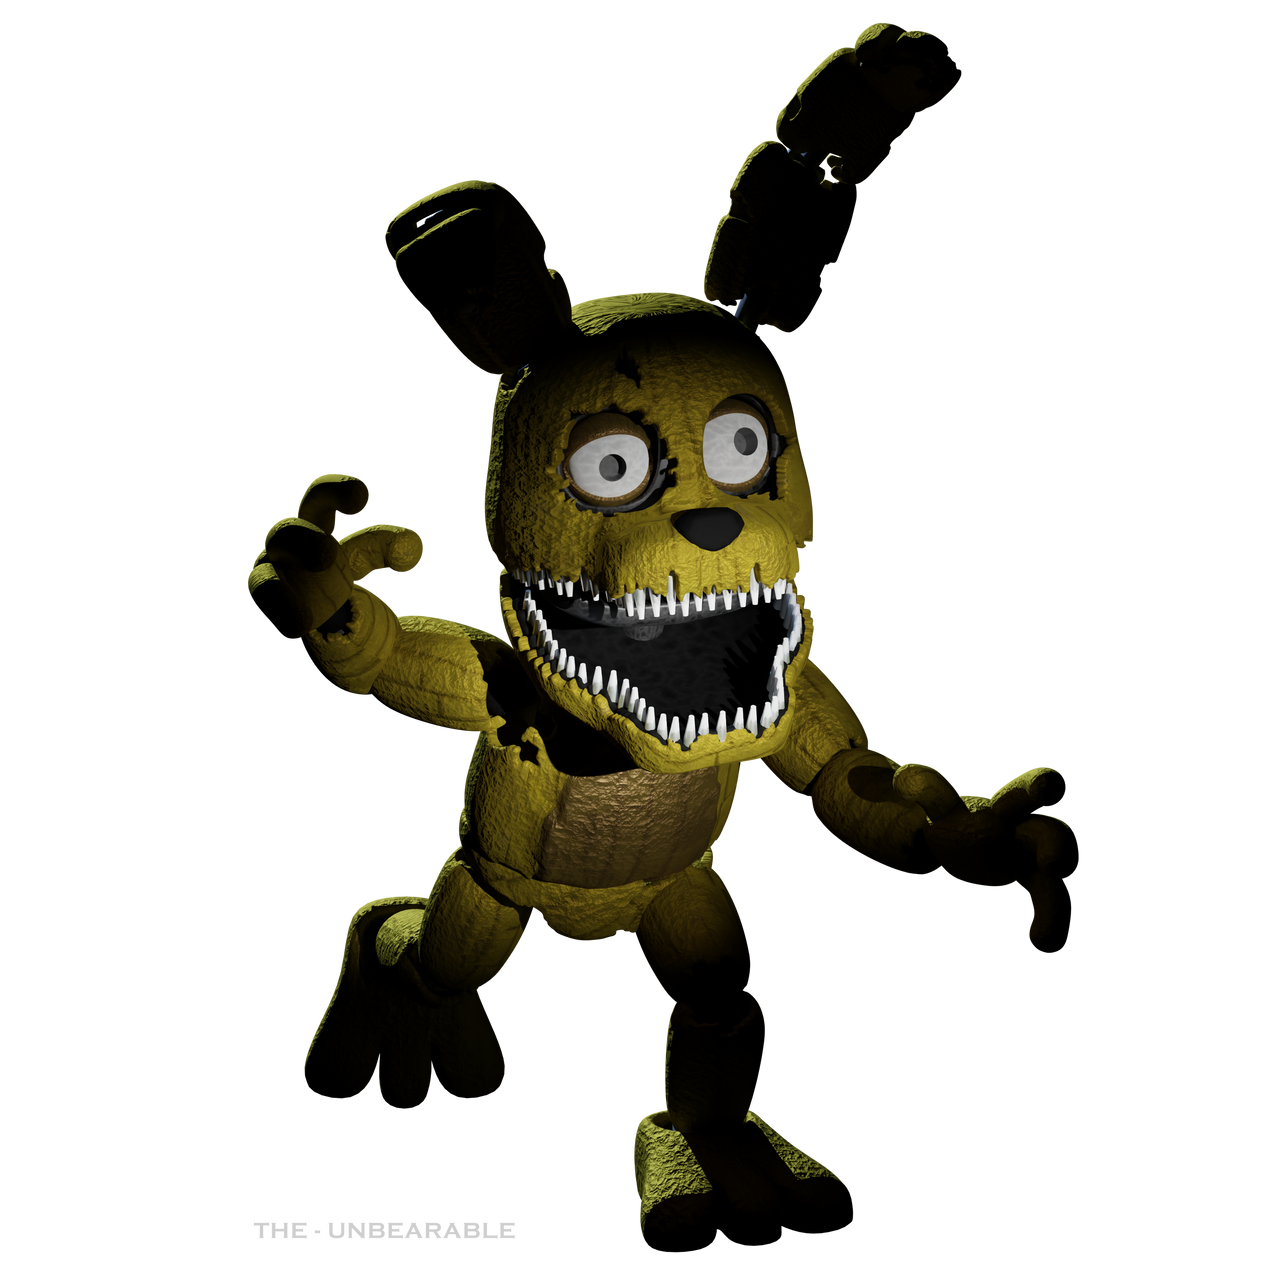 Plushtrap  Fnaf, Freddy's nightmares, Favorite character